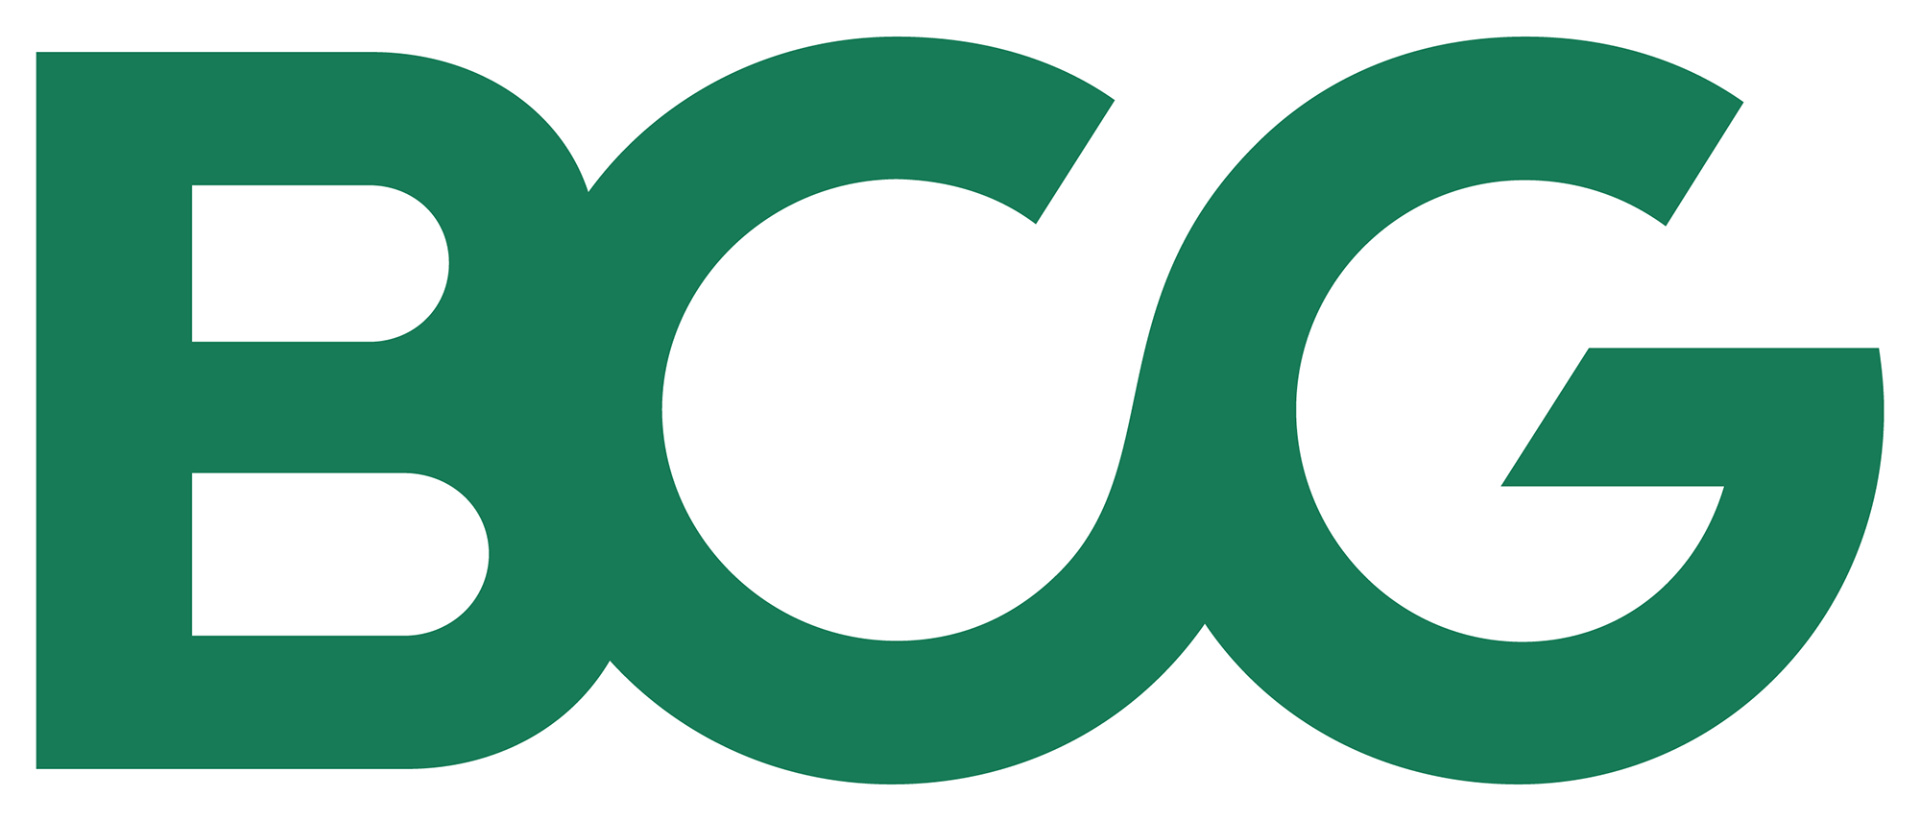 boston-consulting-group-logo-monogram